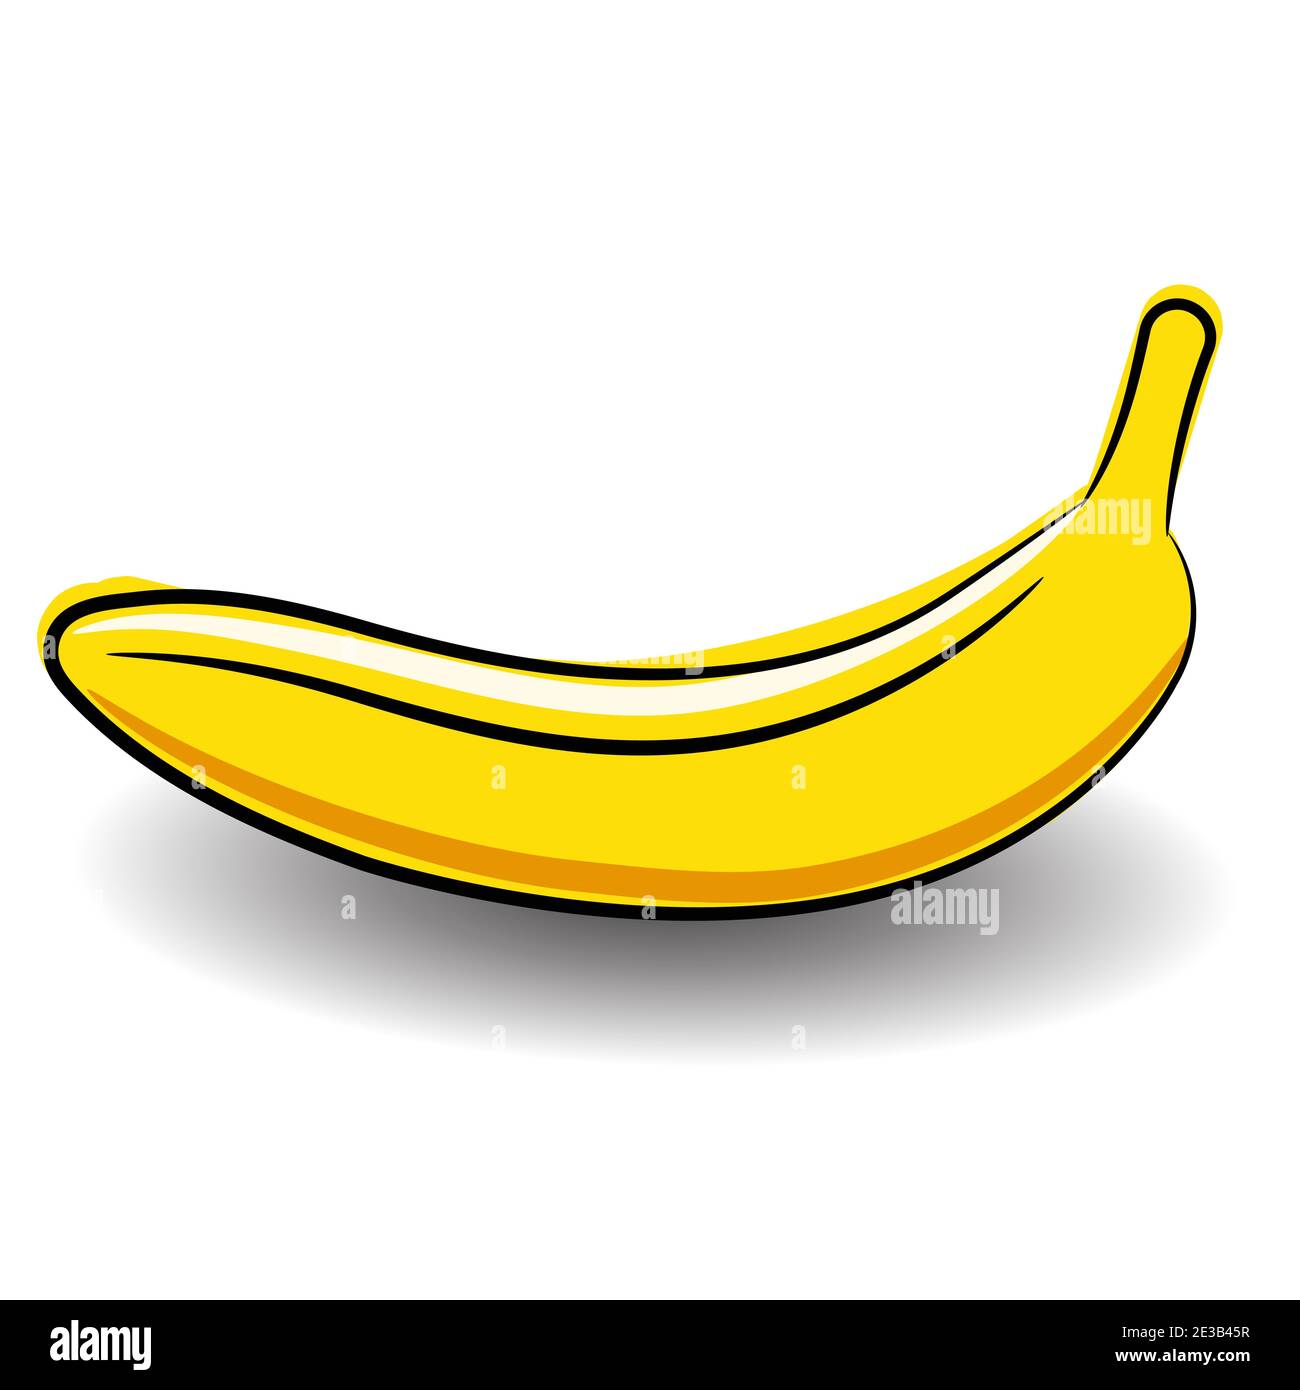 File:Child's drawing of a happy banana in the sun - barnebanantegning.jpg -  Wikimedia Commons